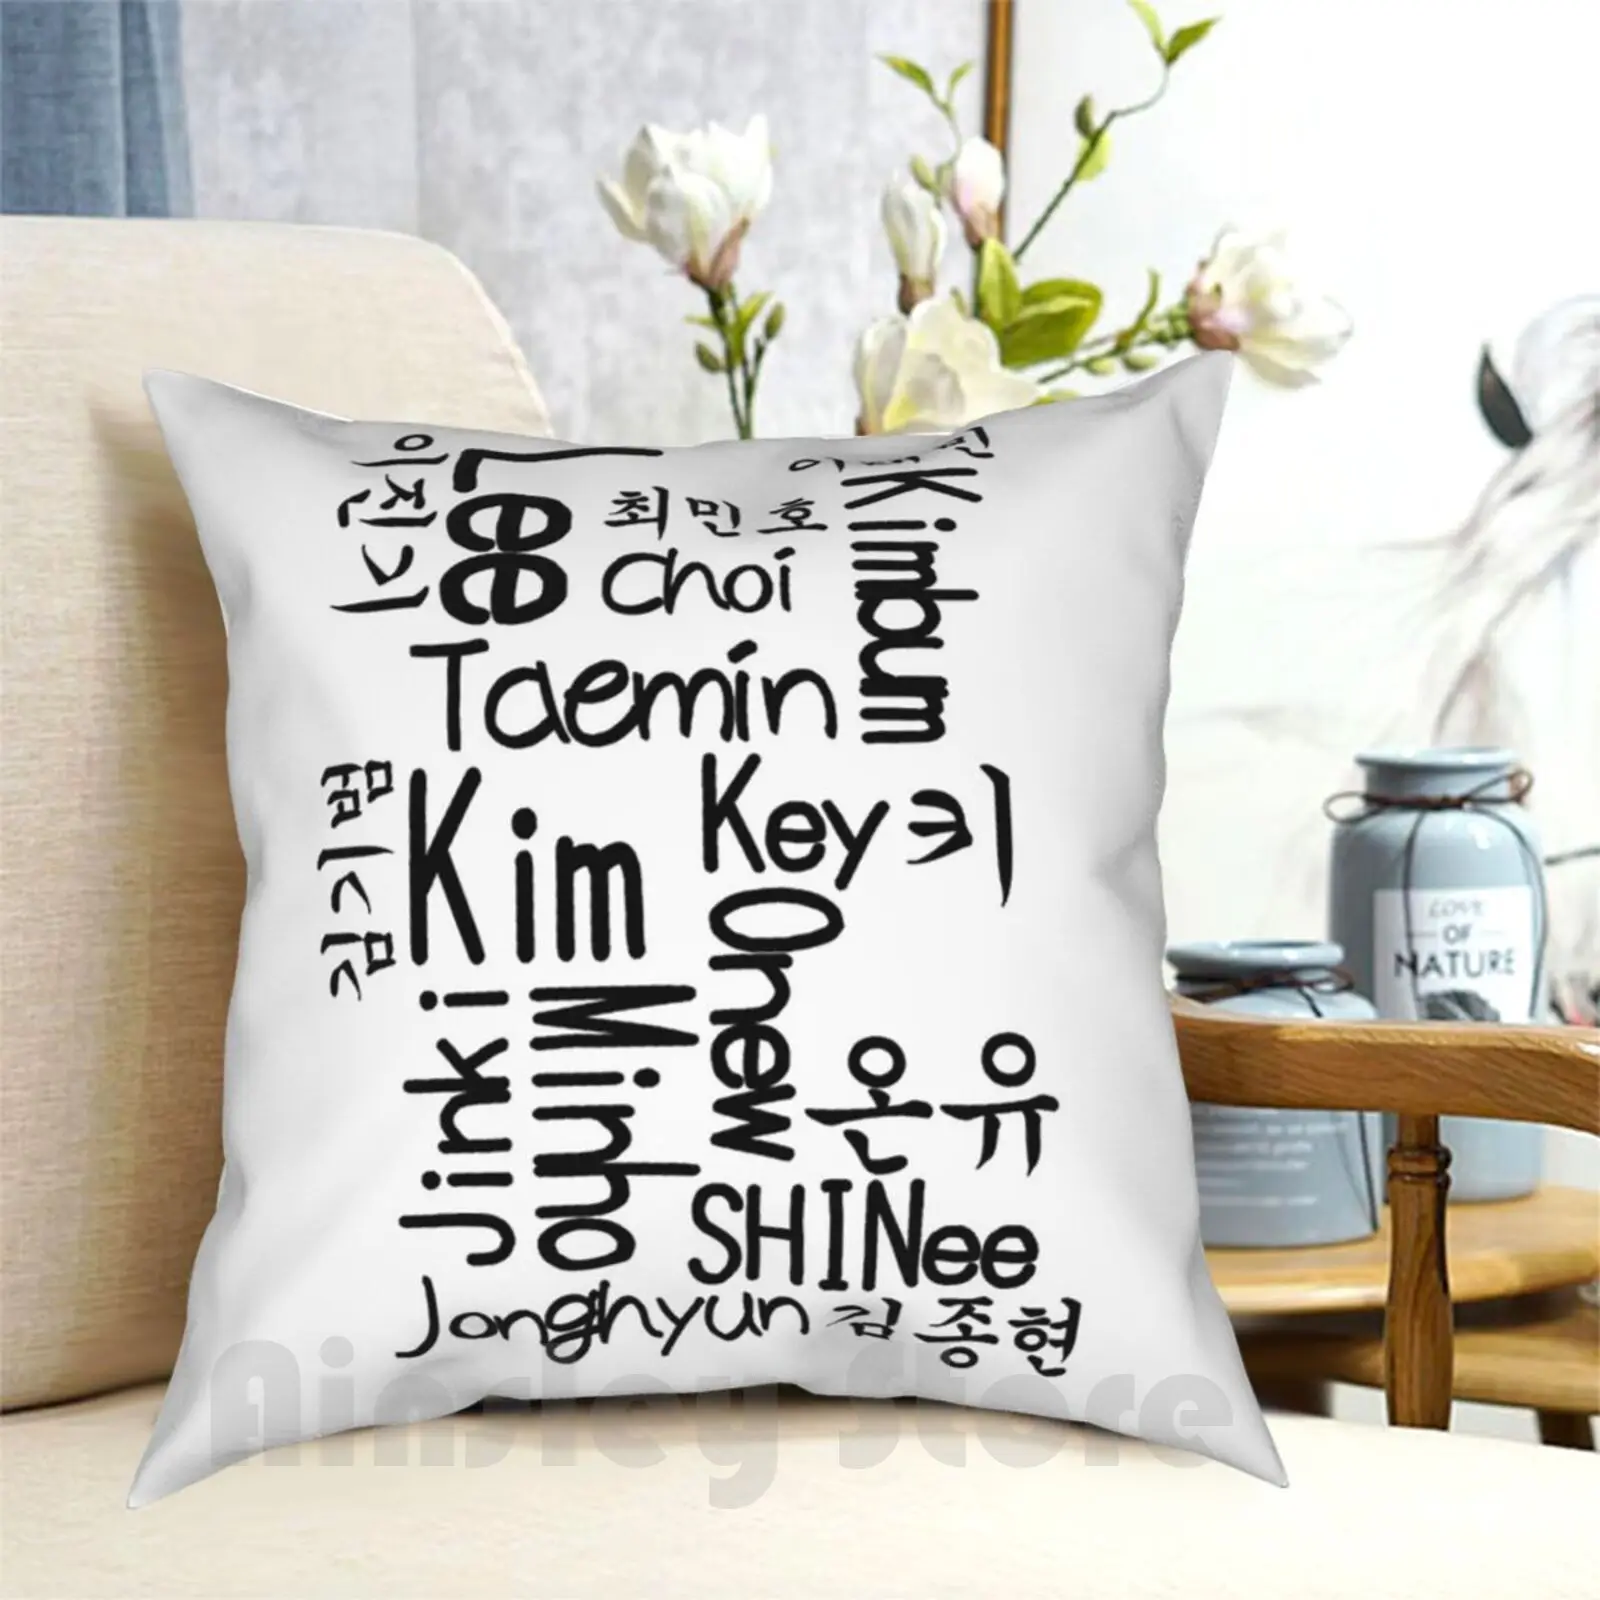 

Shinee Forever Pillow Case Printed Home Soft Throw Pillow Shinee Onew Jonghyun Minho Taemin Key Kibum Kim Kpop Singing